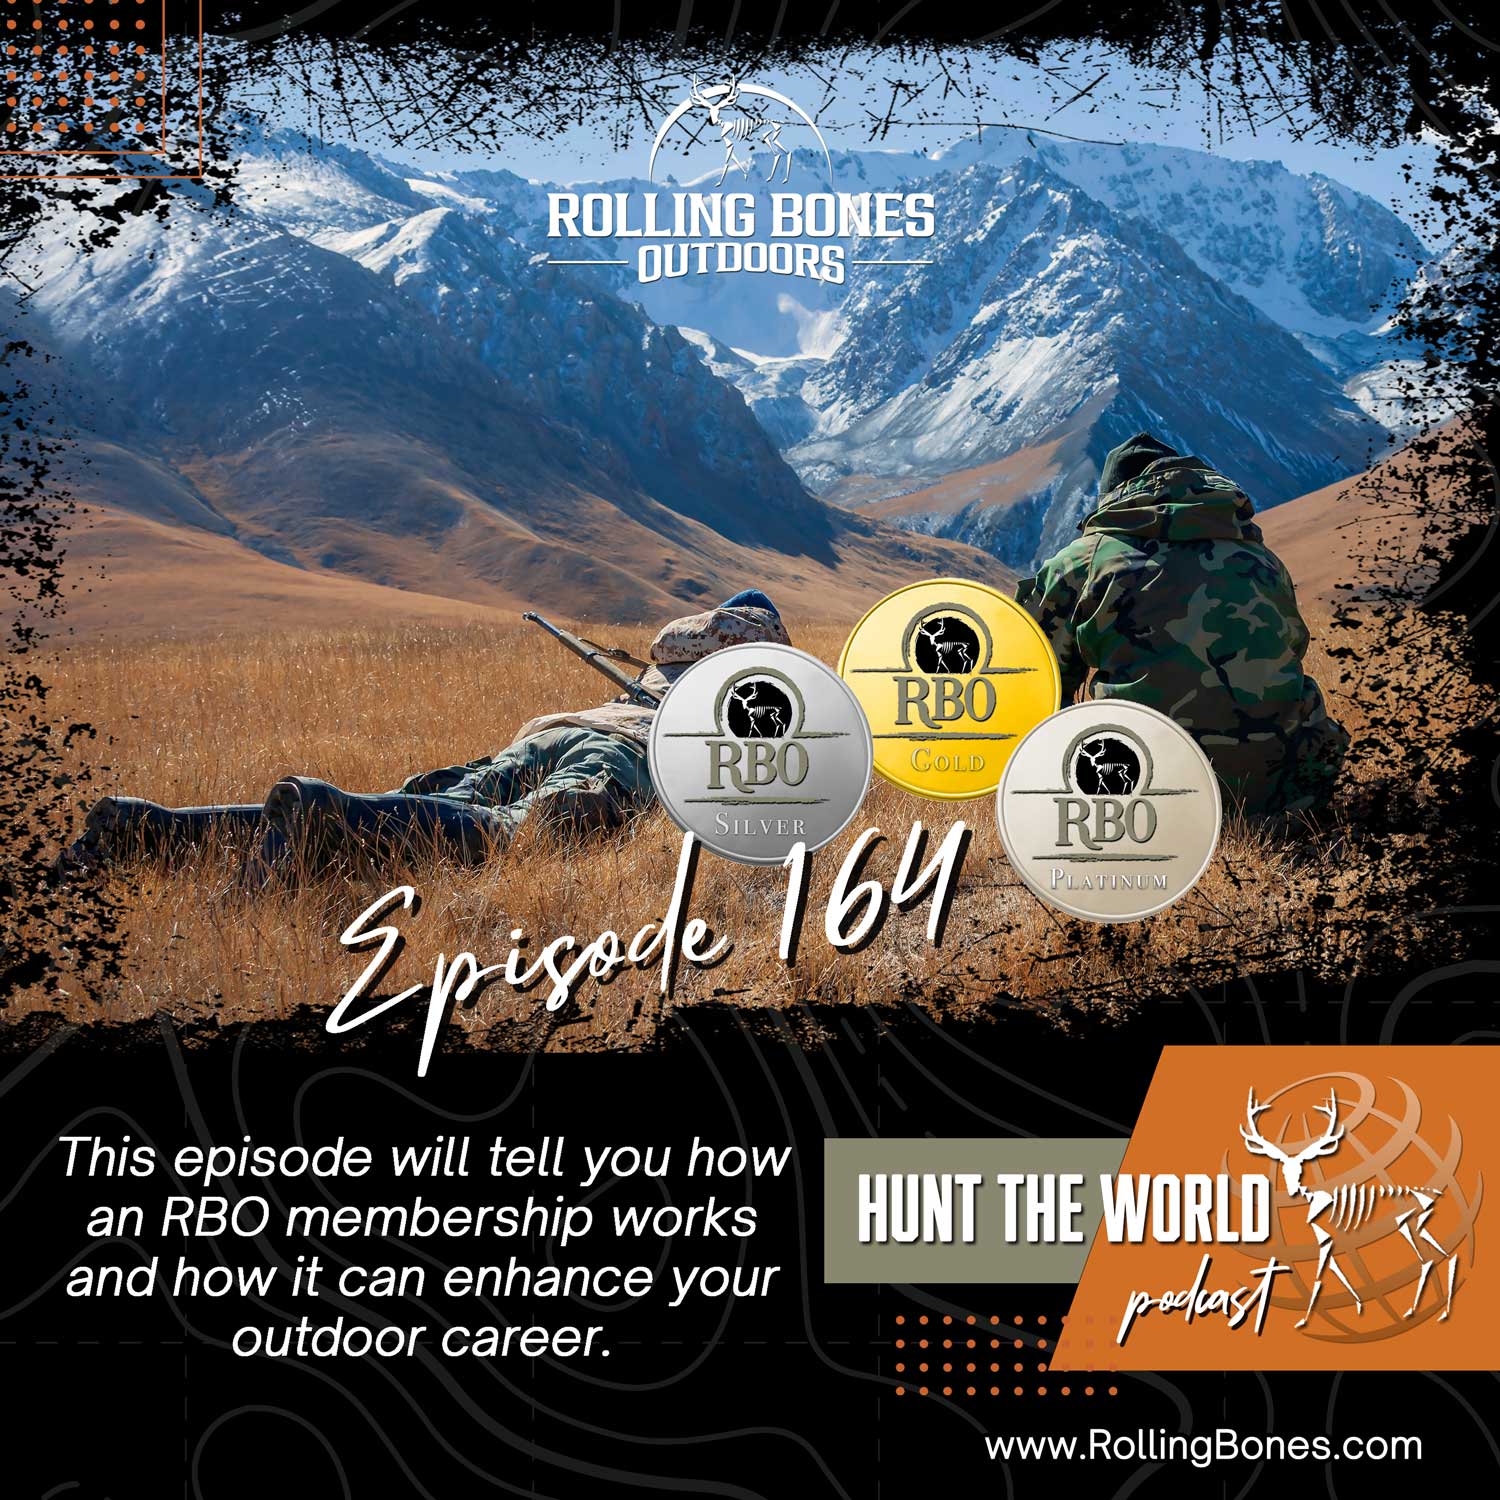 Artwork for podcast Hunt the World